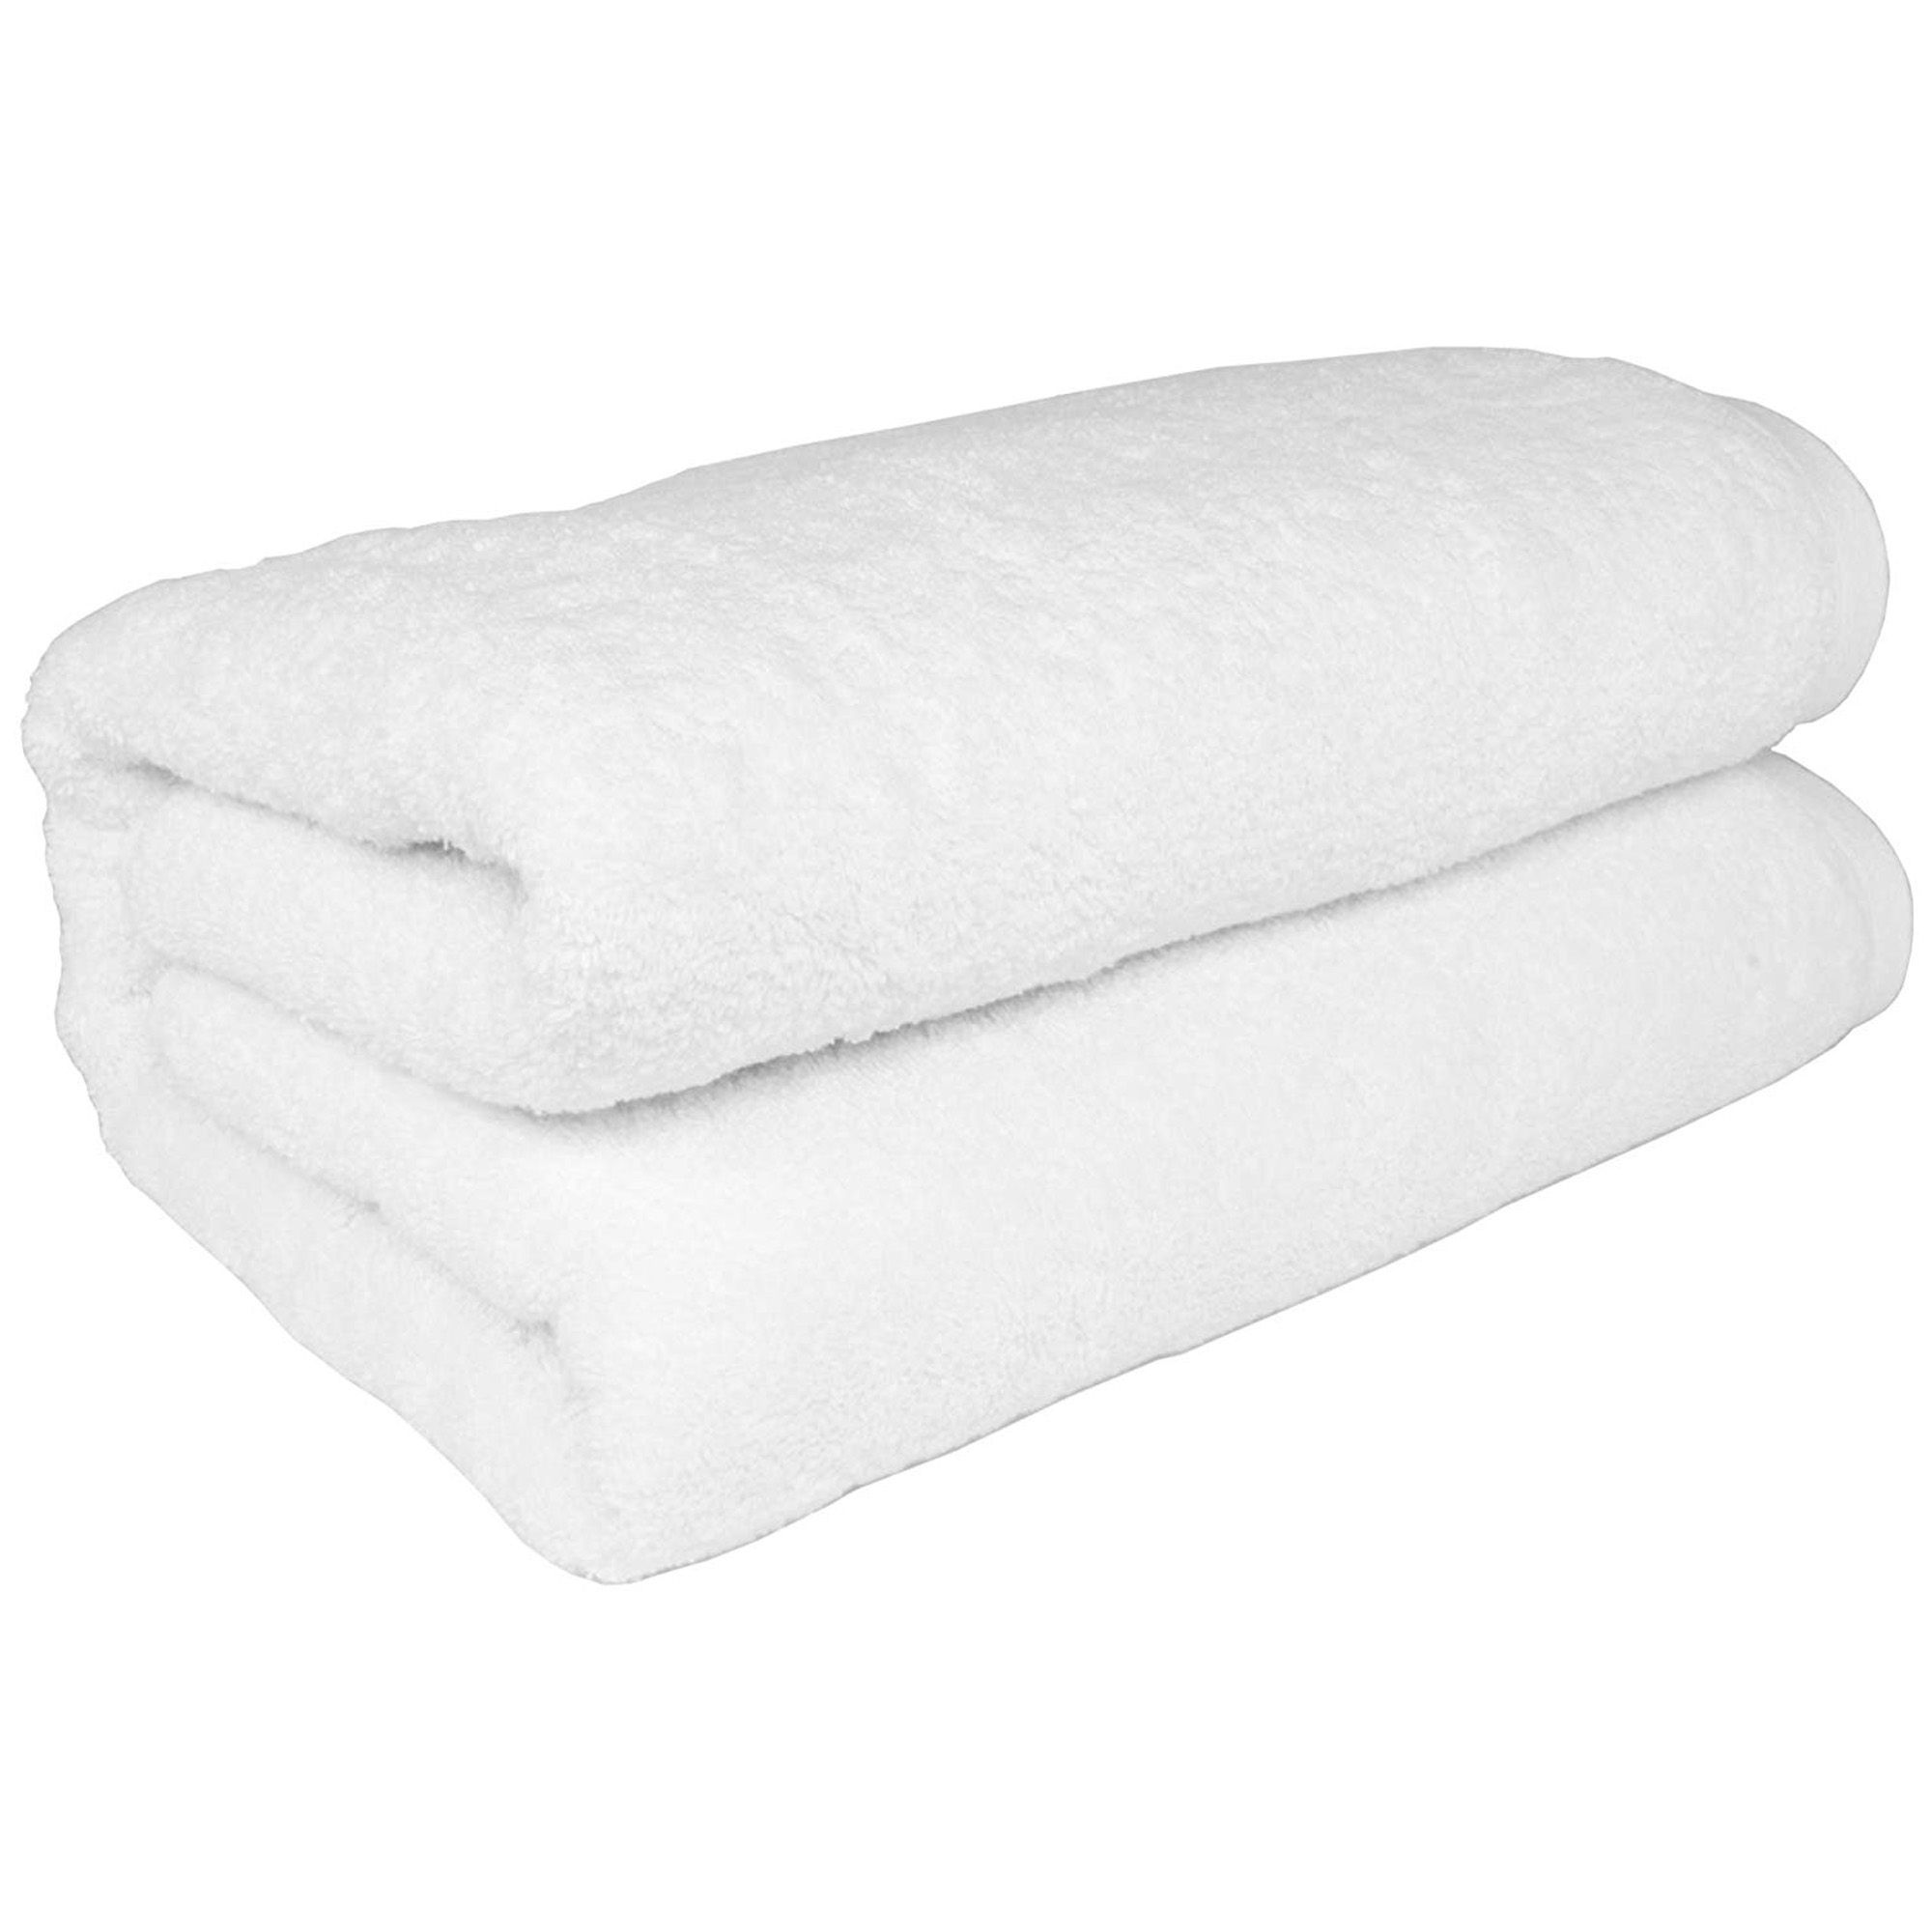 Bath sheets vs bath towels price